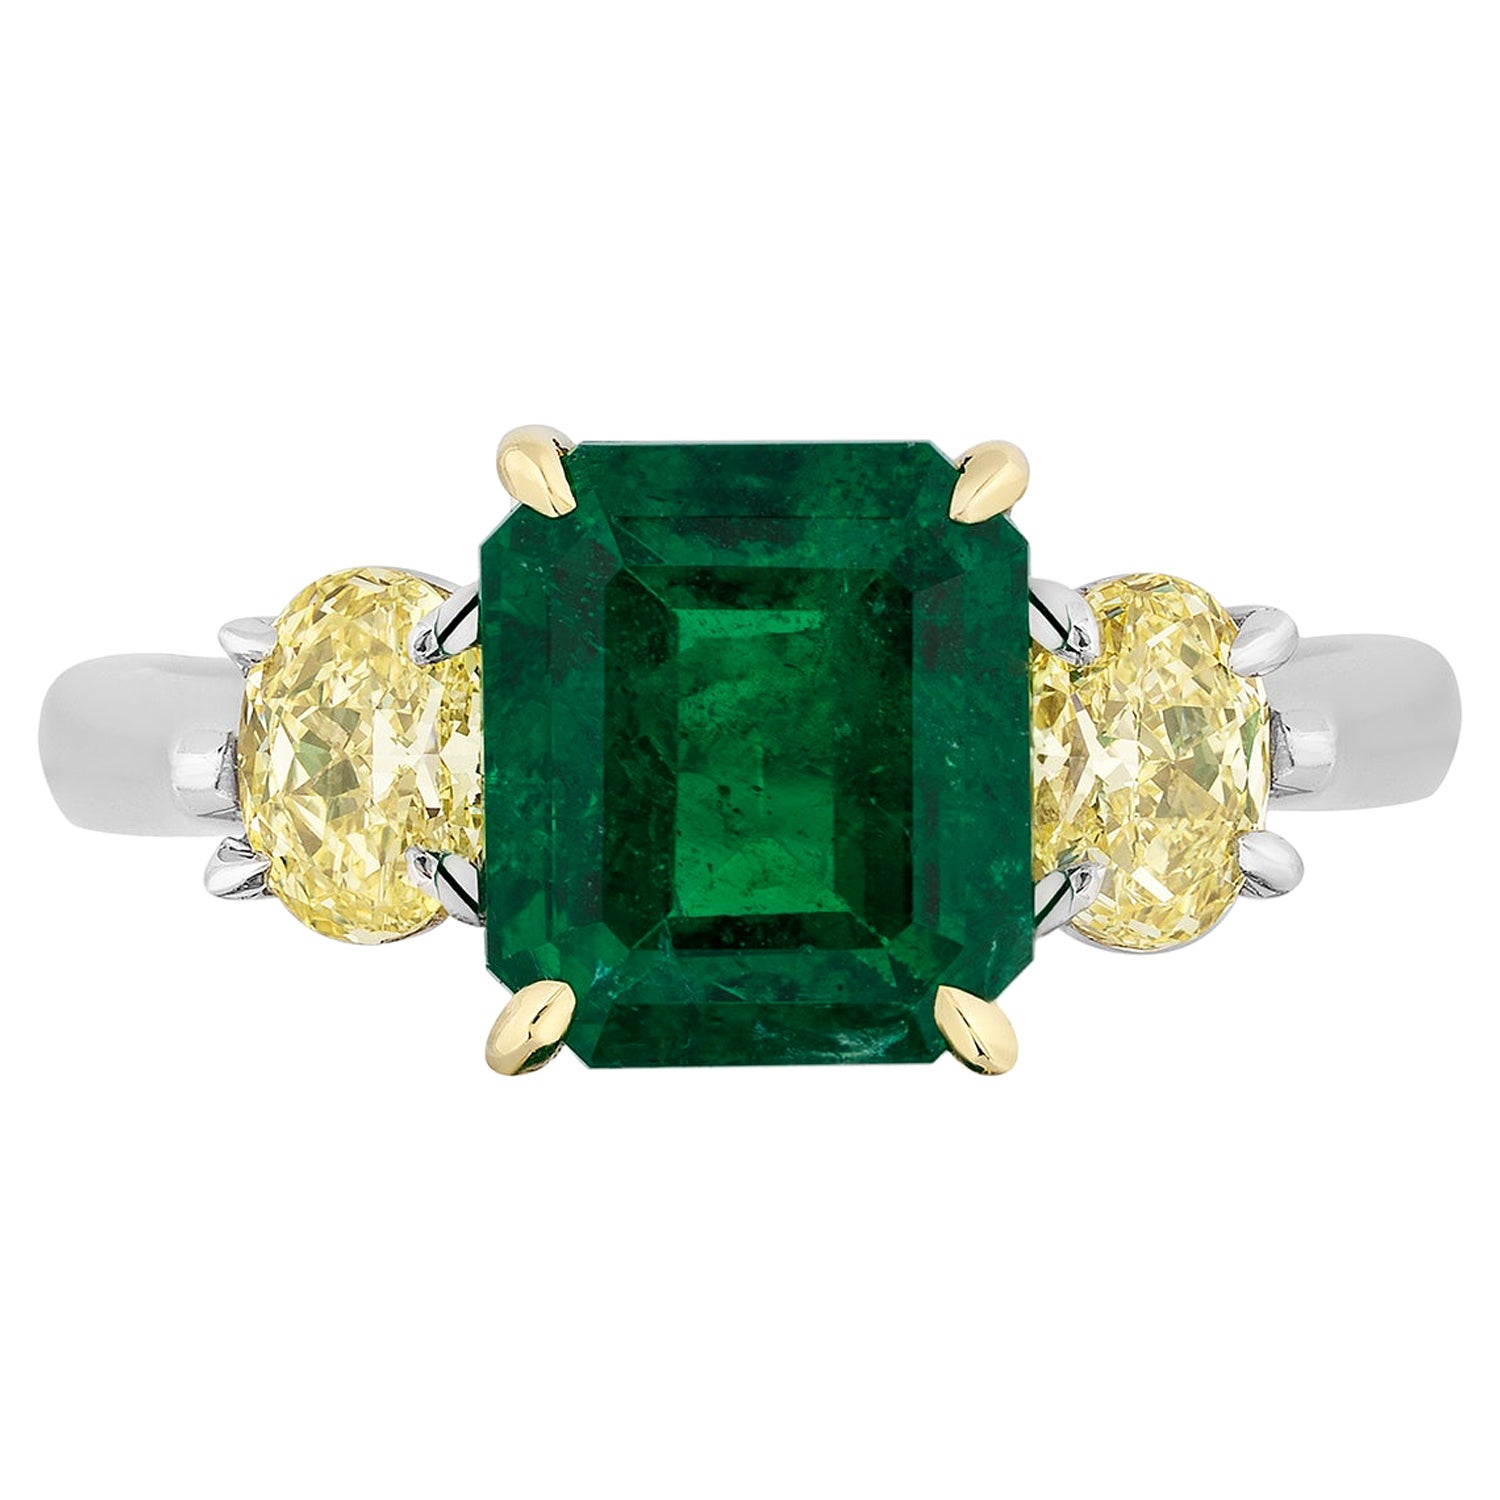 Andreoli 2.96 Carat Zambian Emerald Yellow Diamond Platinum Ring CDC Certified